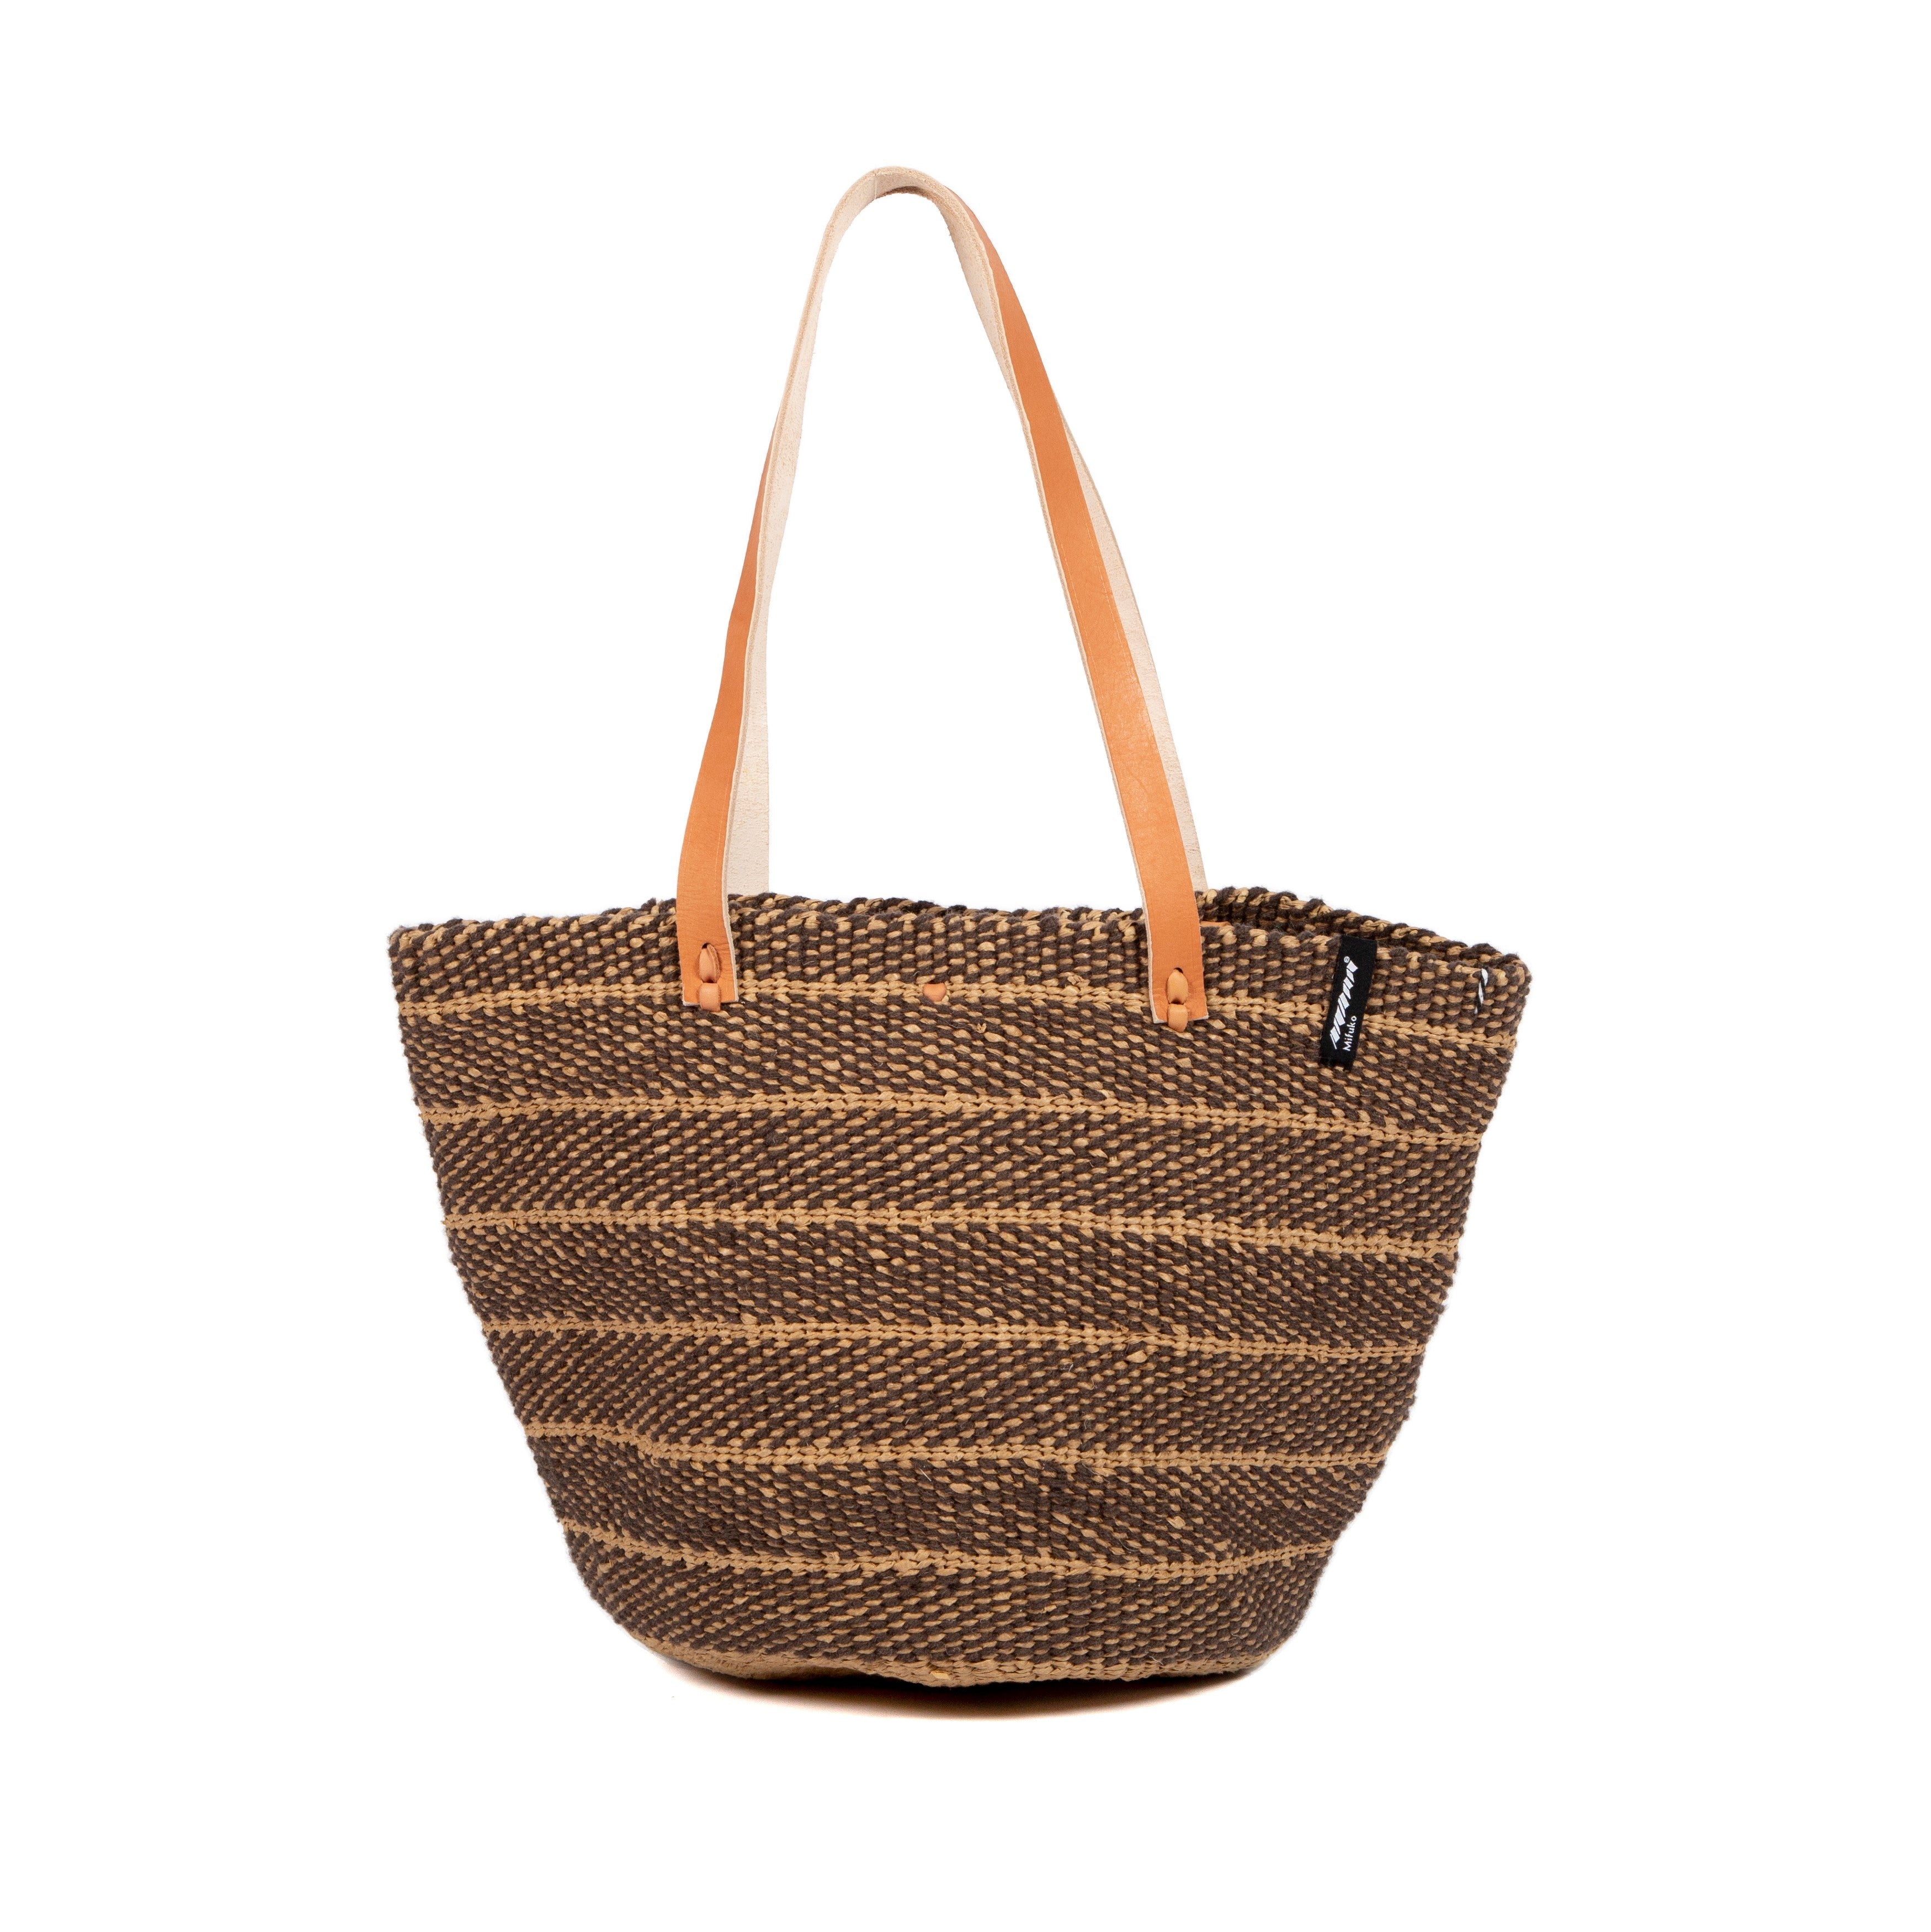 Pamba shopper basket | Dark brown twill weave M